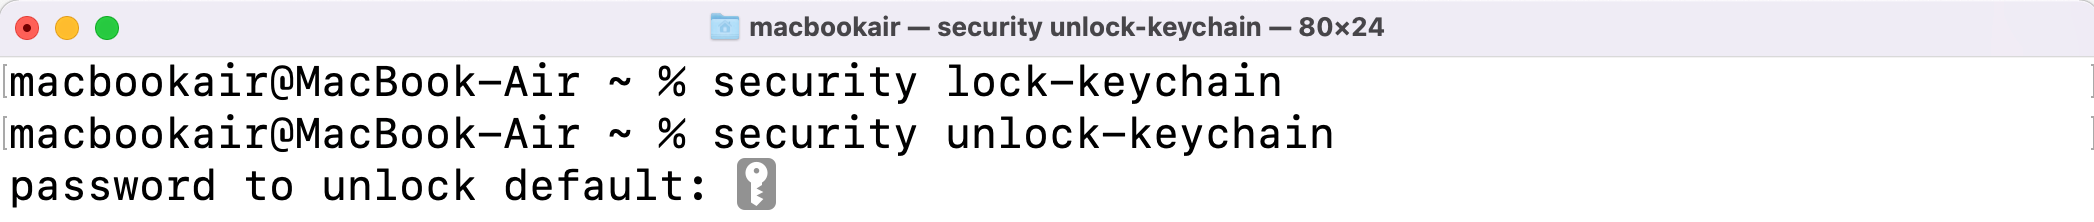 unlock keychain image.png